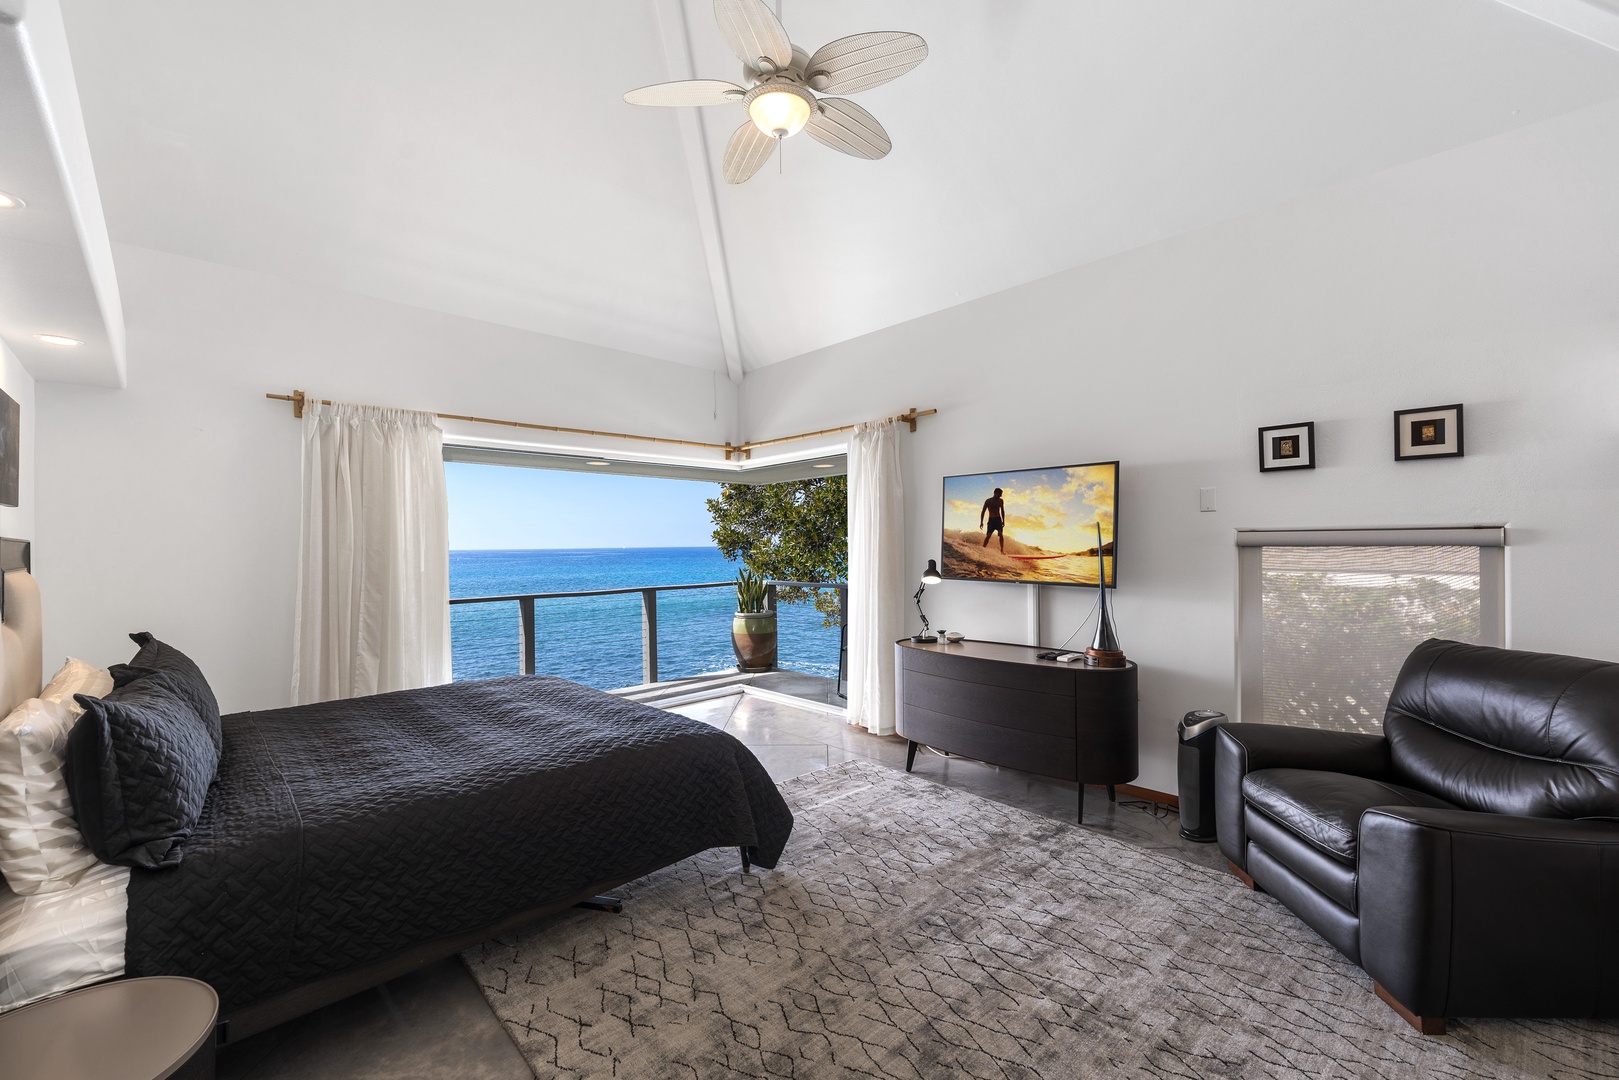 Kailua-Kona Vacation Rentals, Hale Kope Kai - Corner pocket door bringing the view to you!